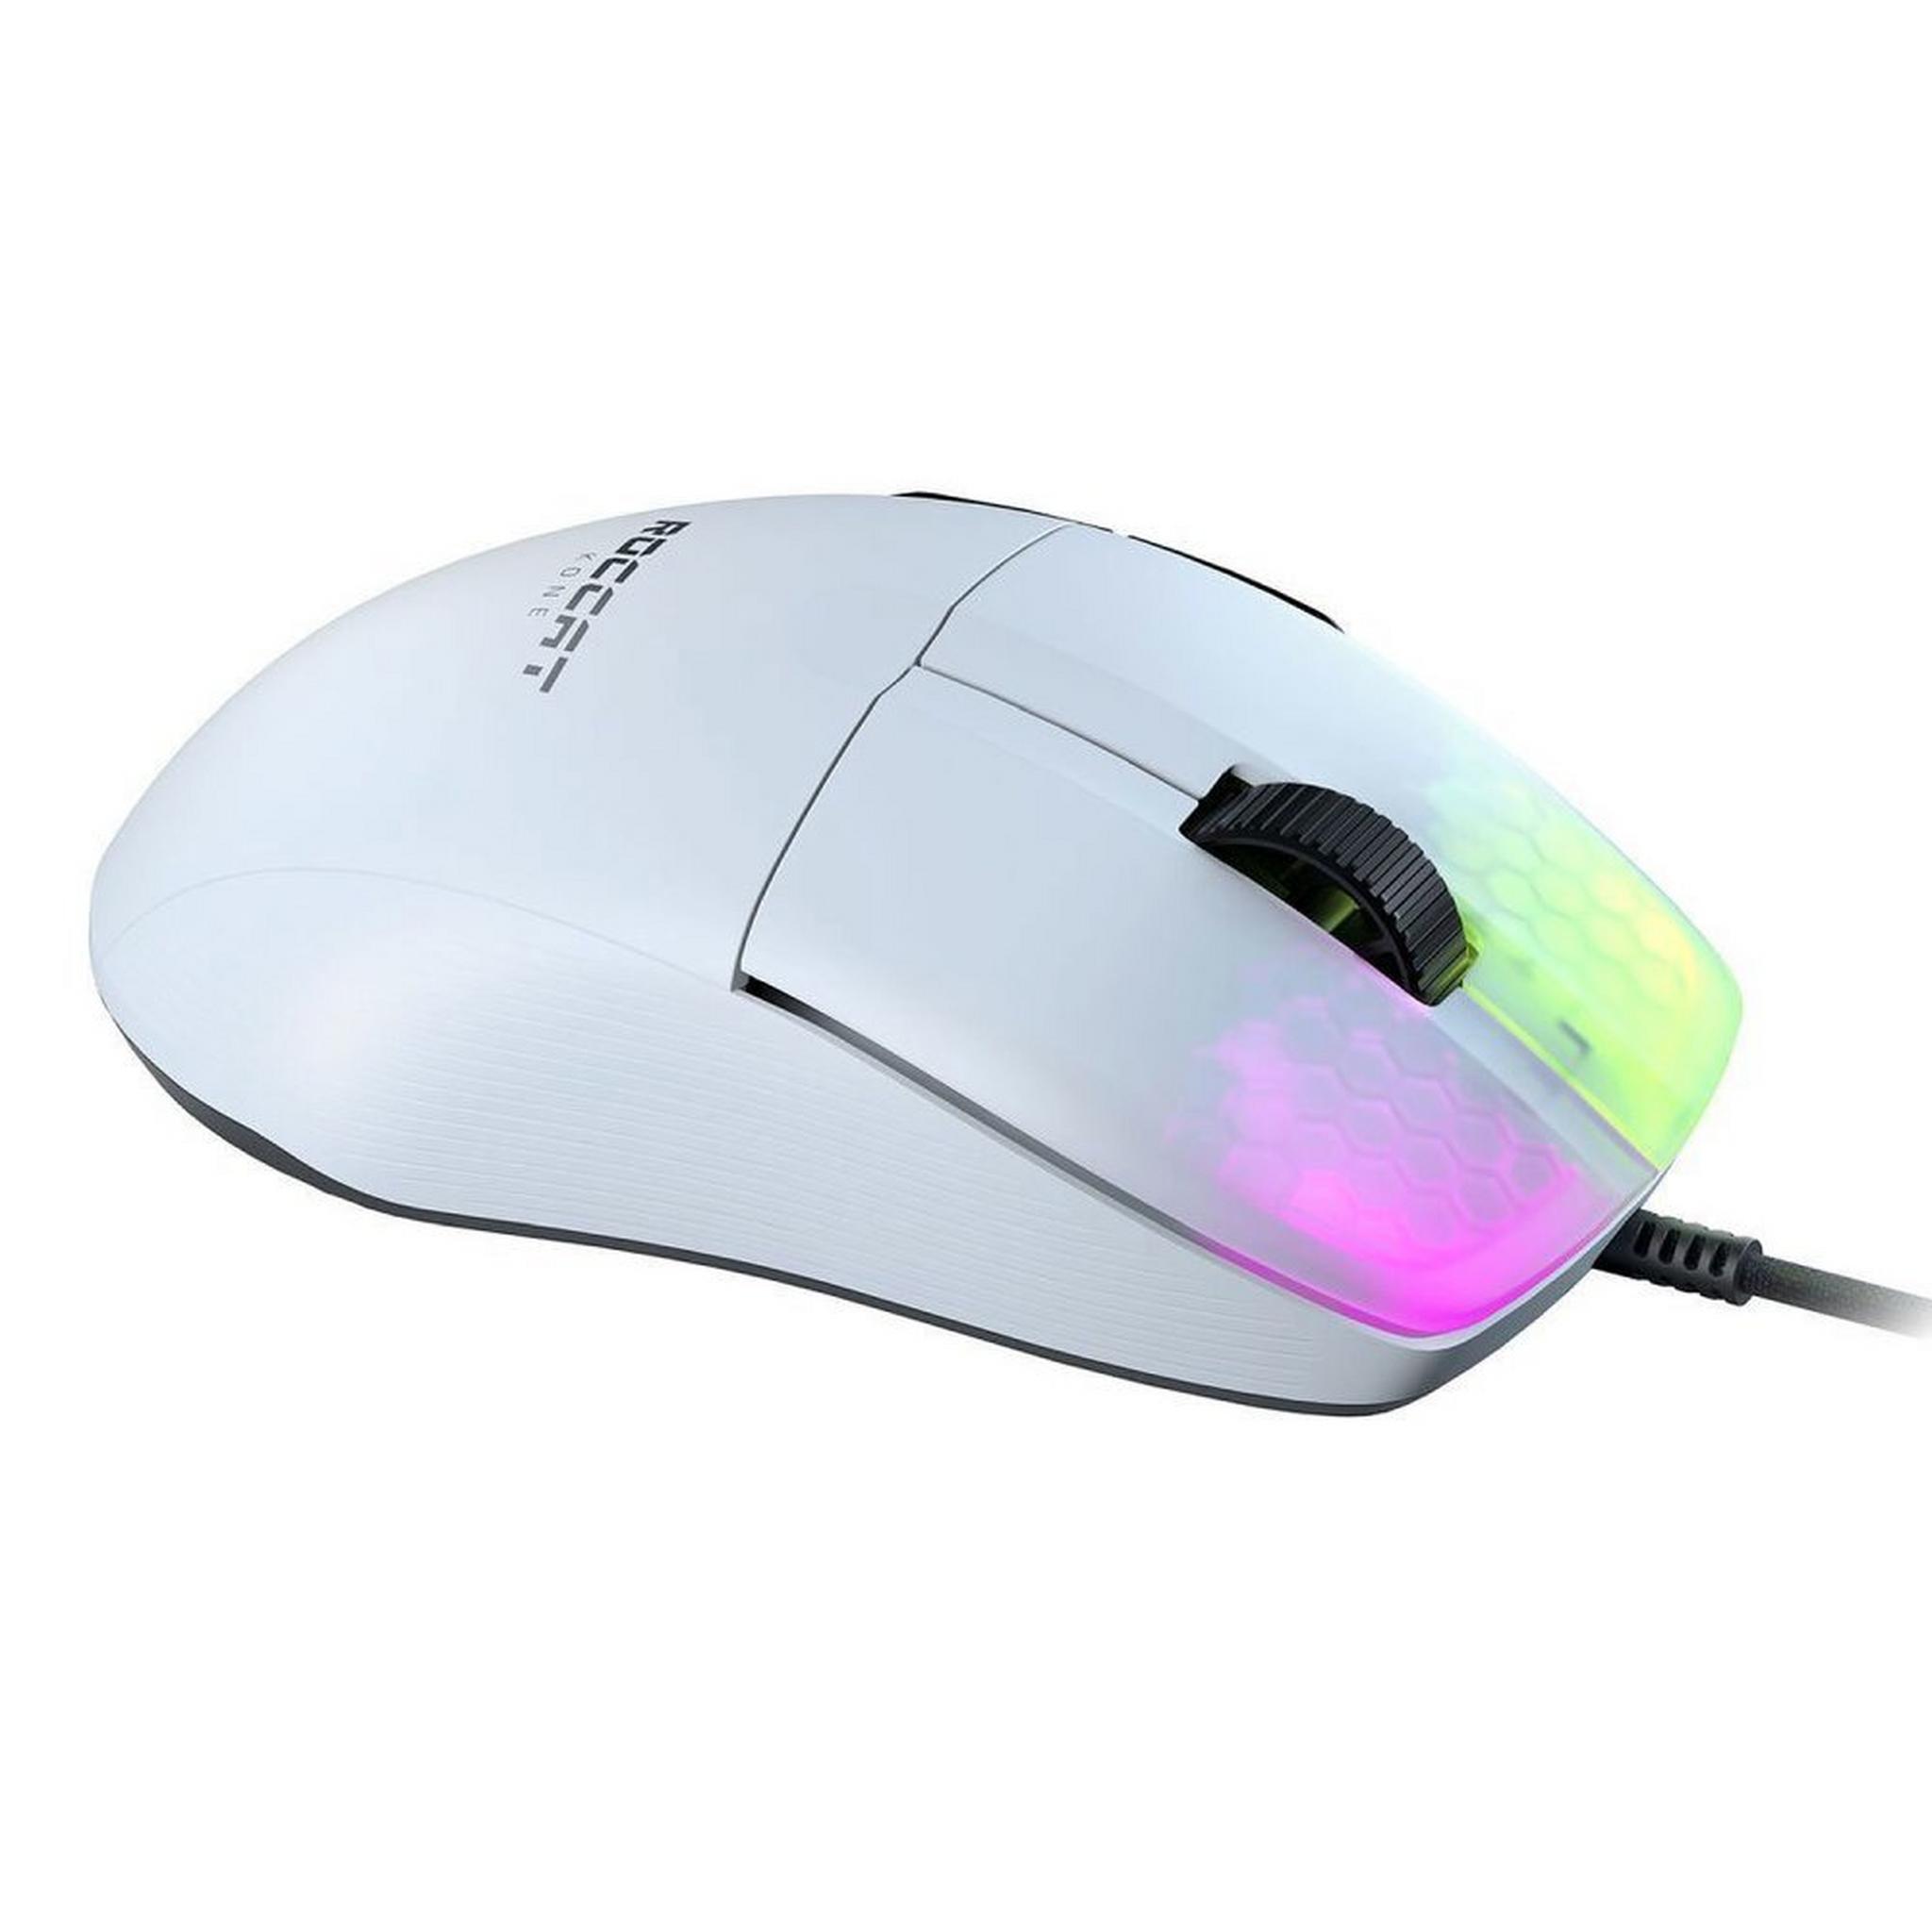 Roccat Kone Pro RGB Gaming Mouse - White